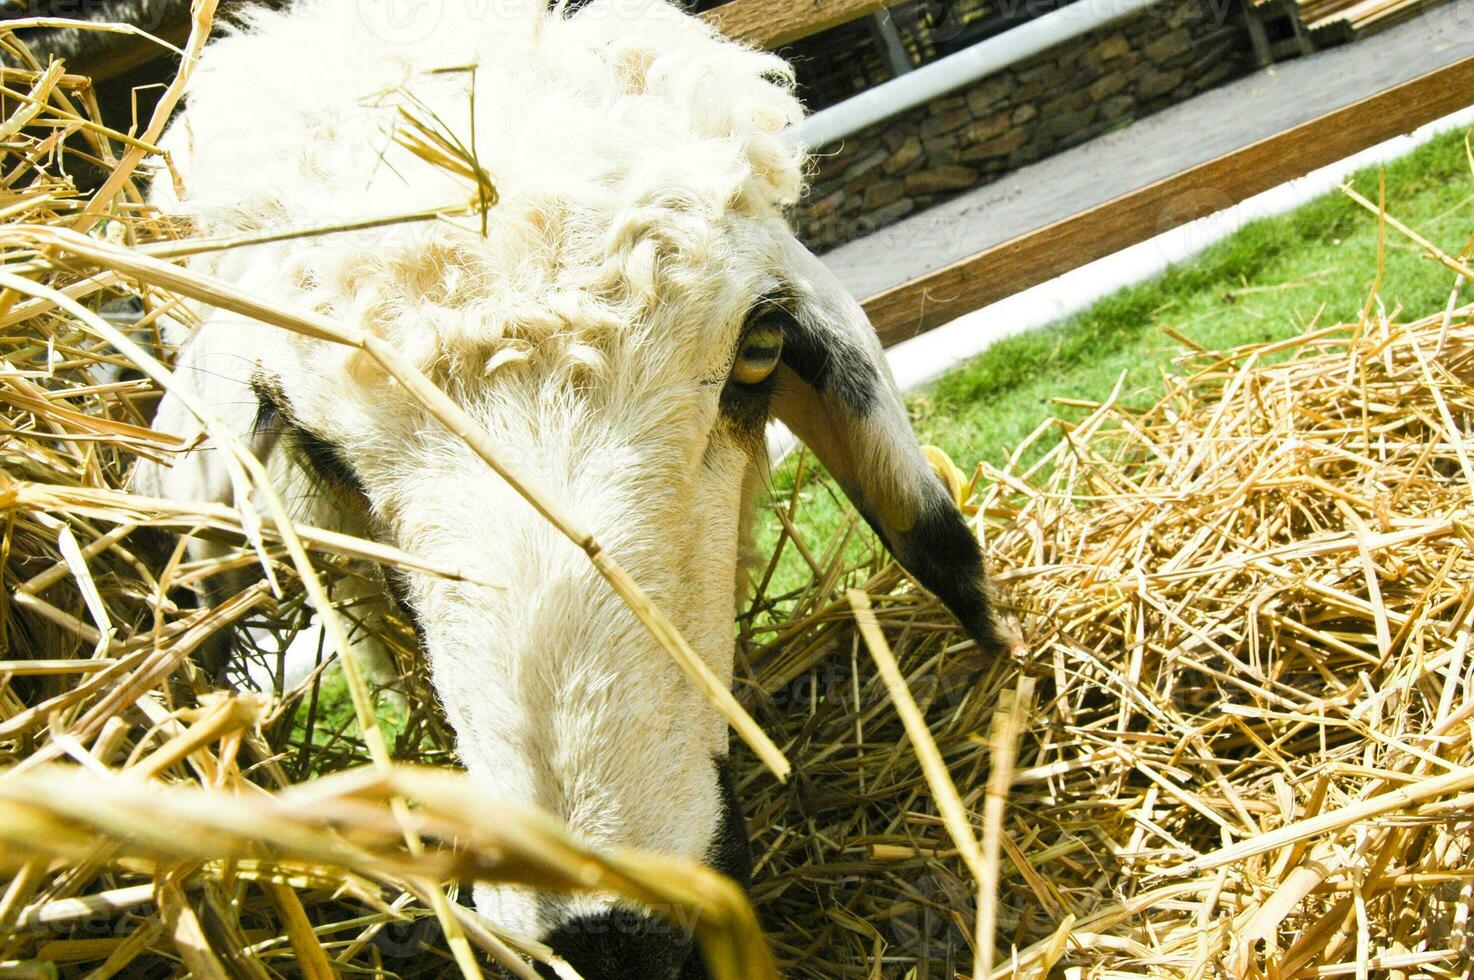 sheep eating straw on the farm photo